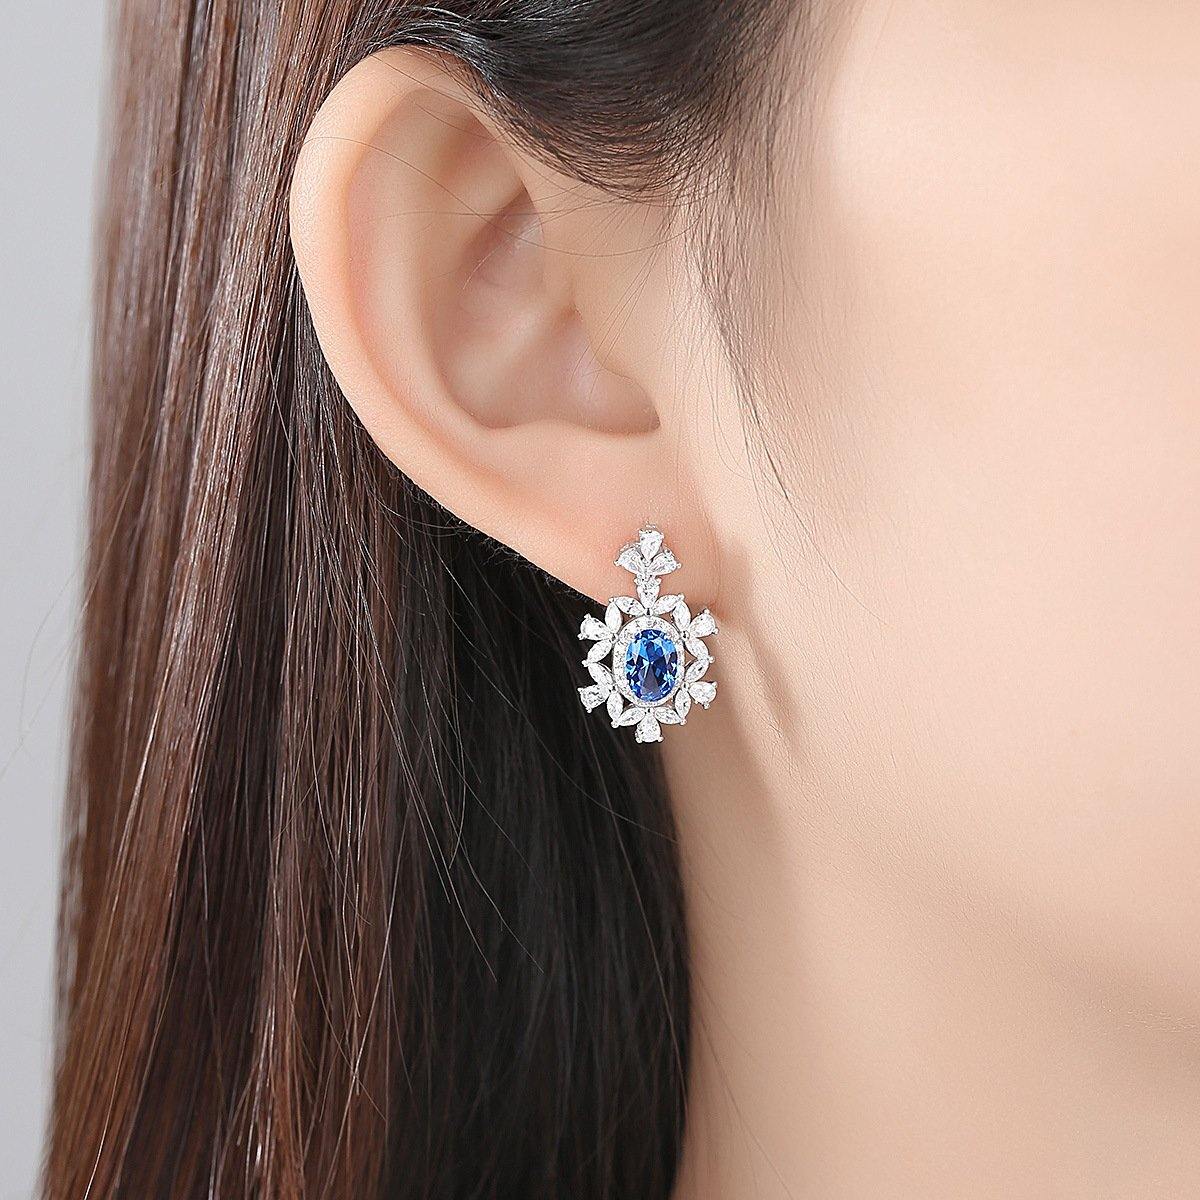 Blue Sapphire Earrings Vintage Style - HERS